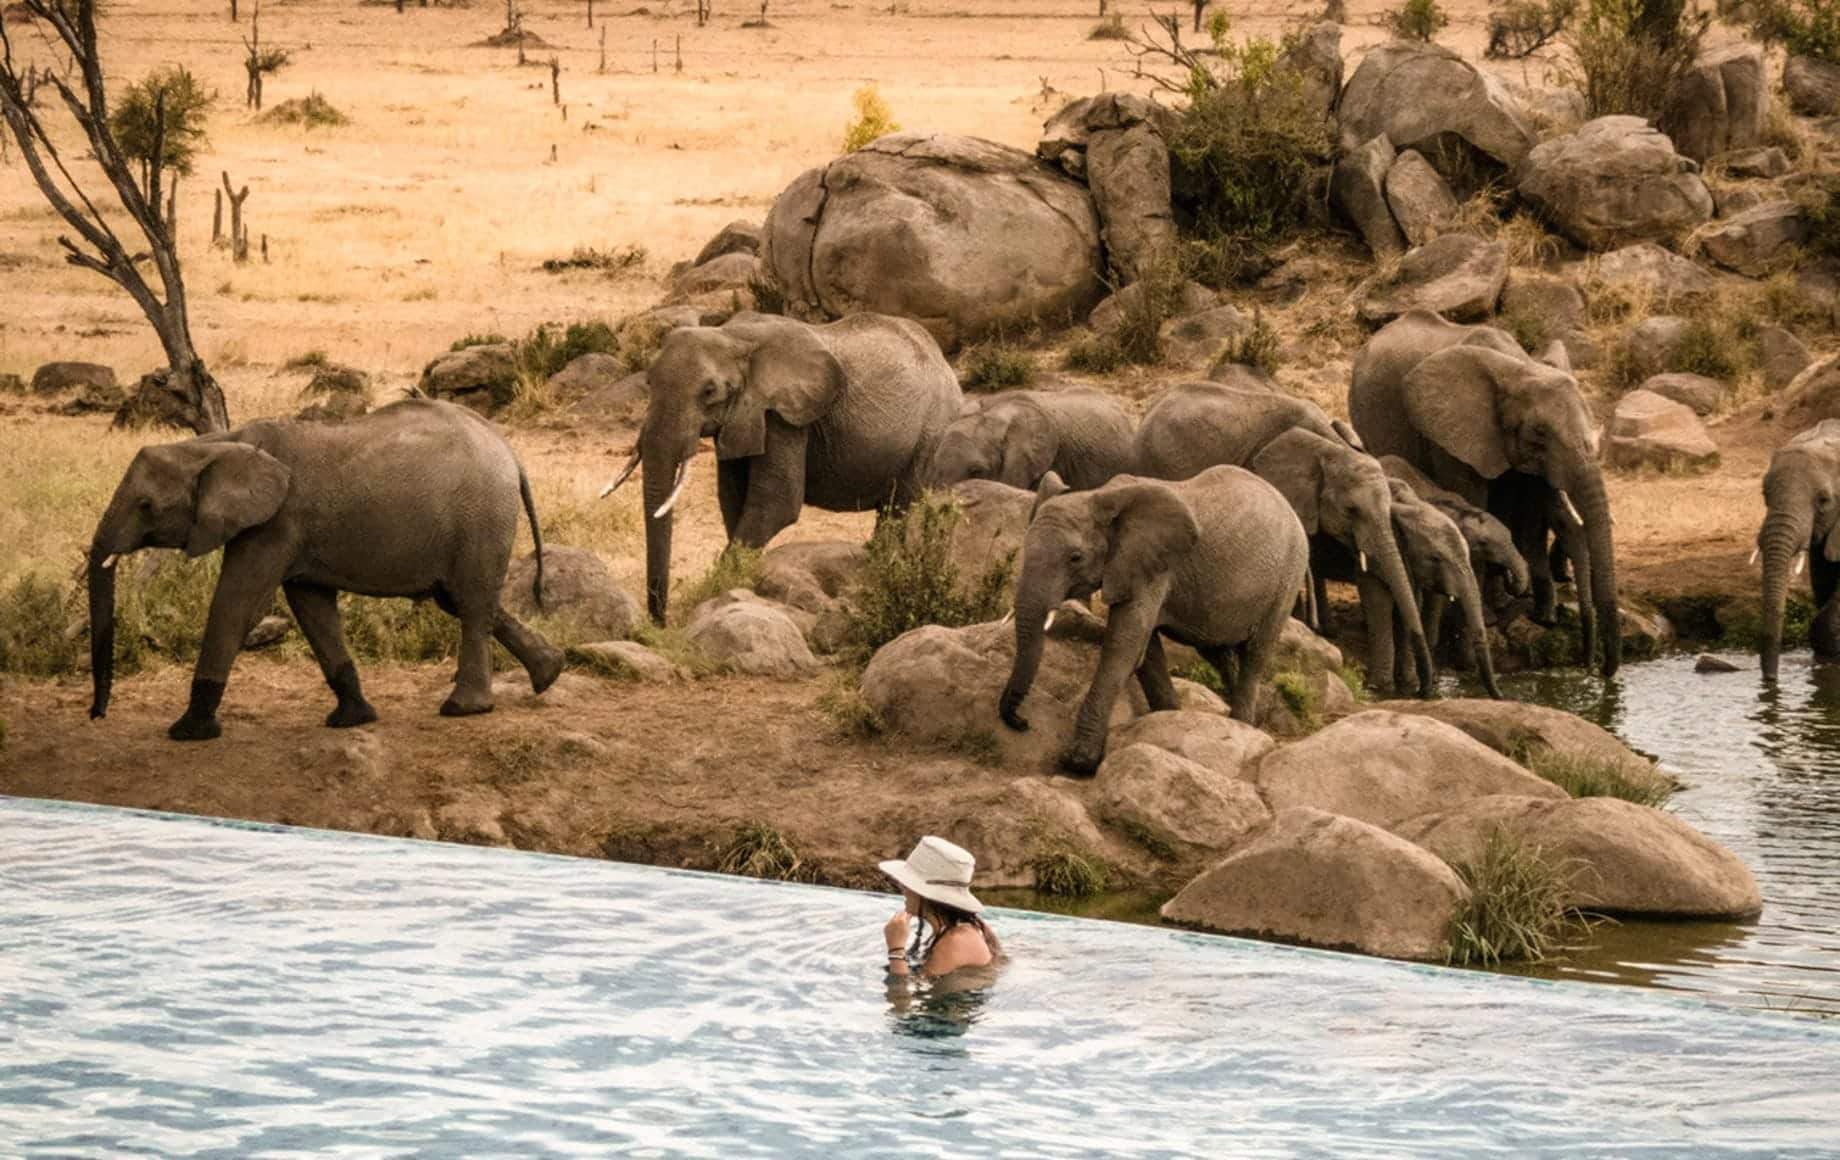 Elephants at Serengeti national park